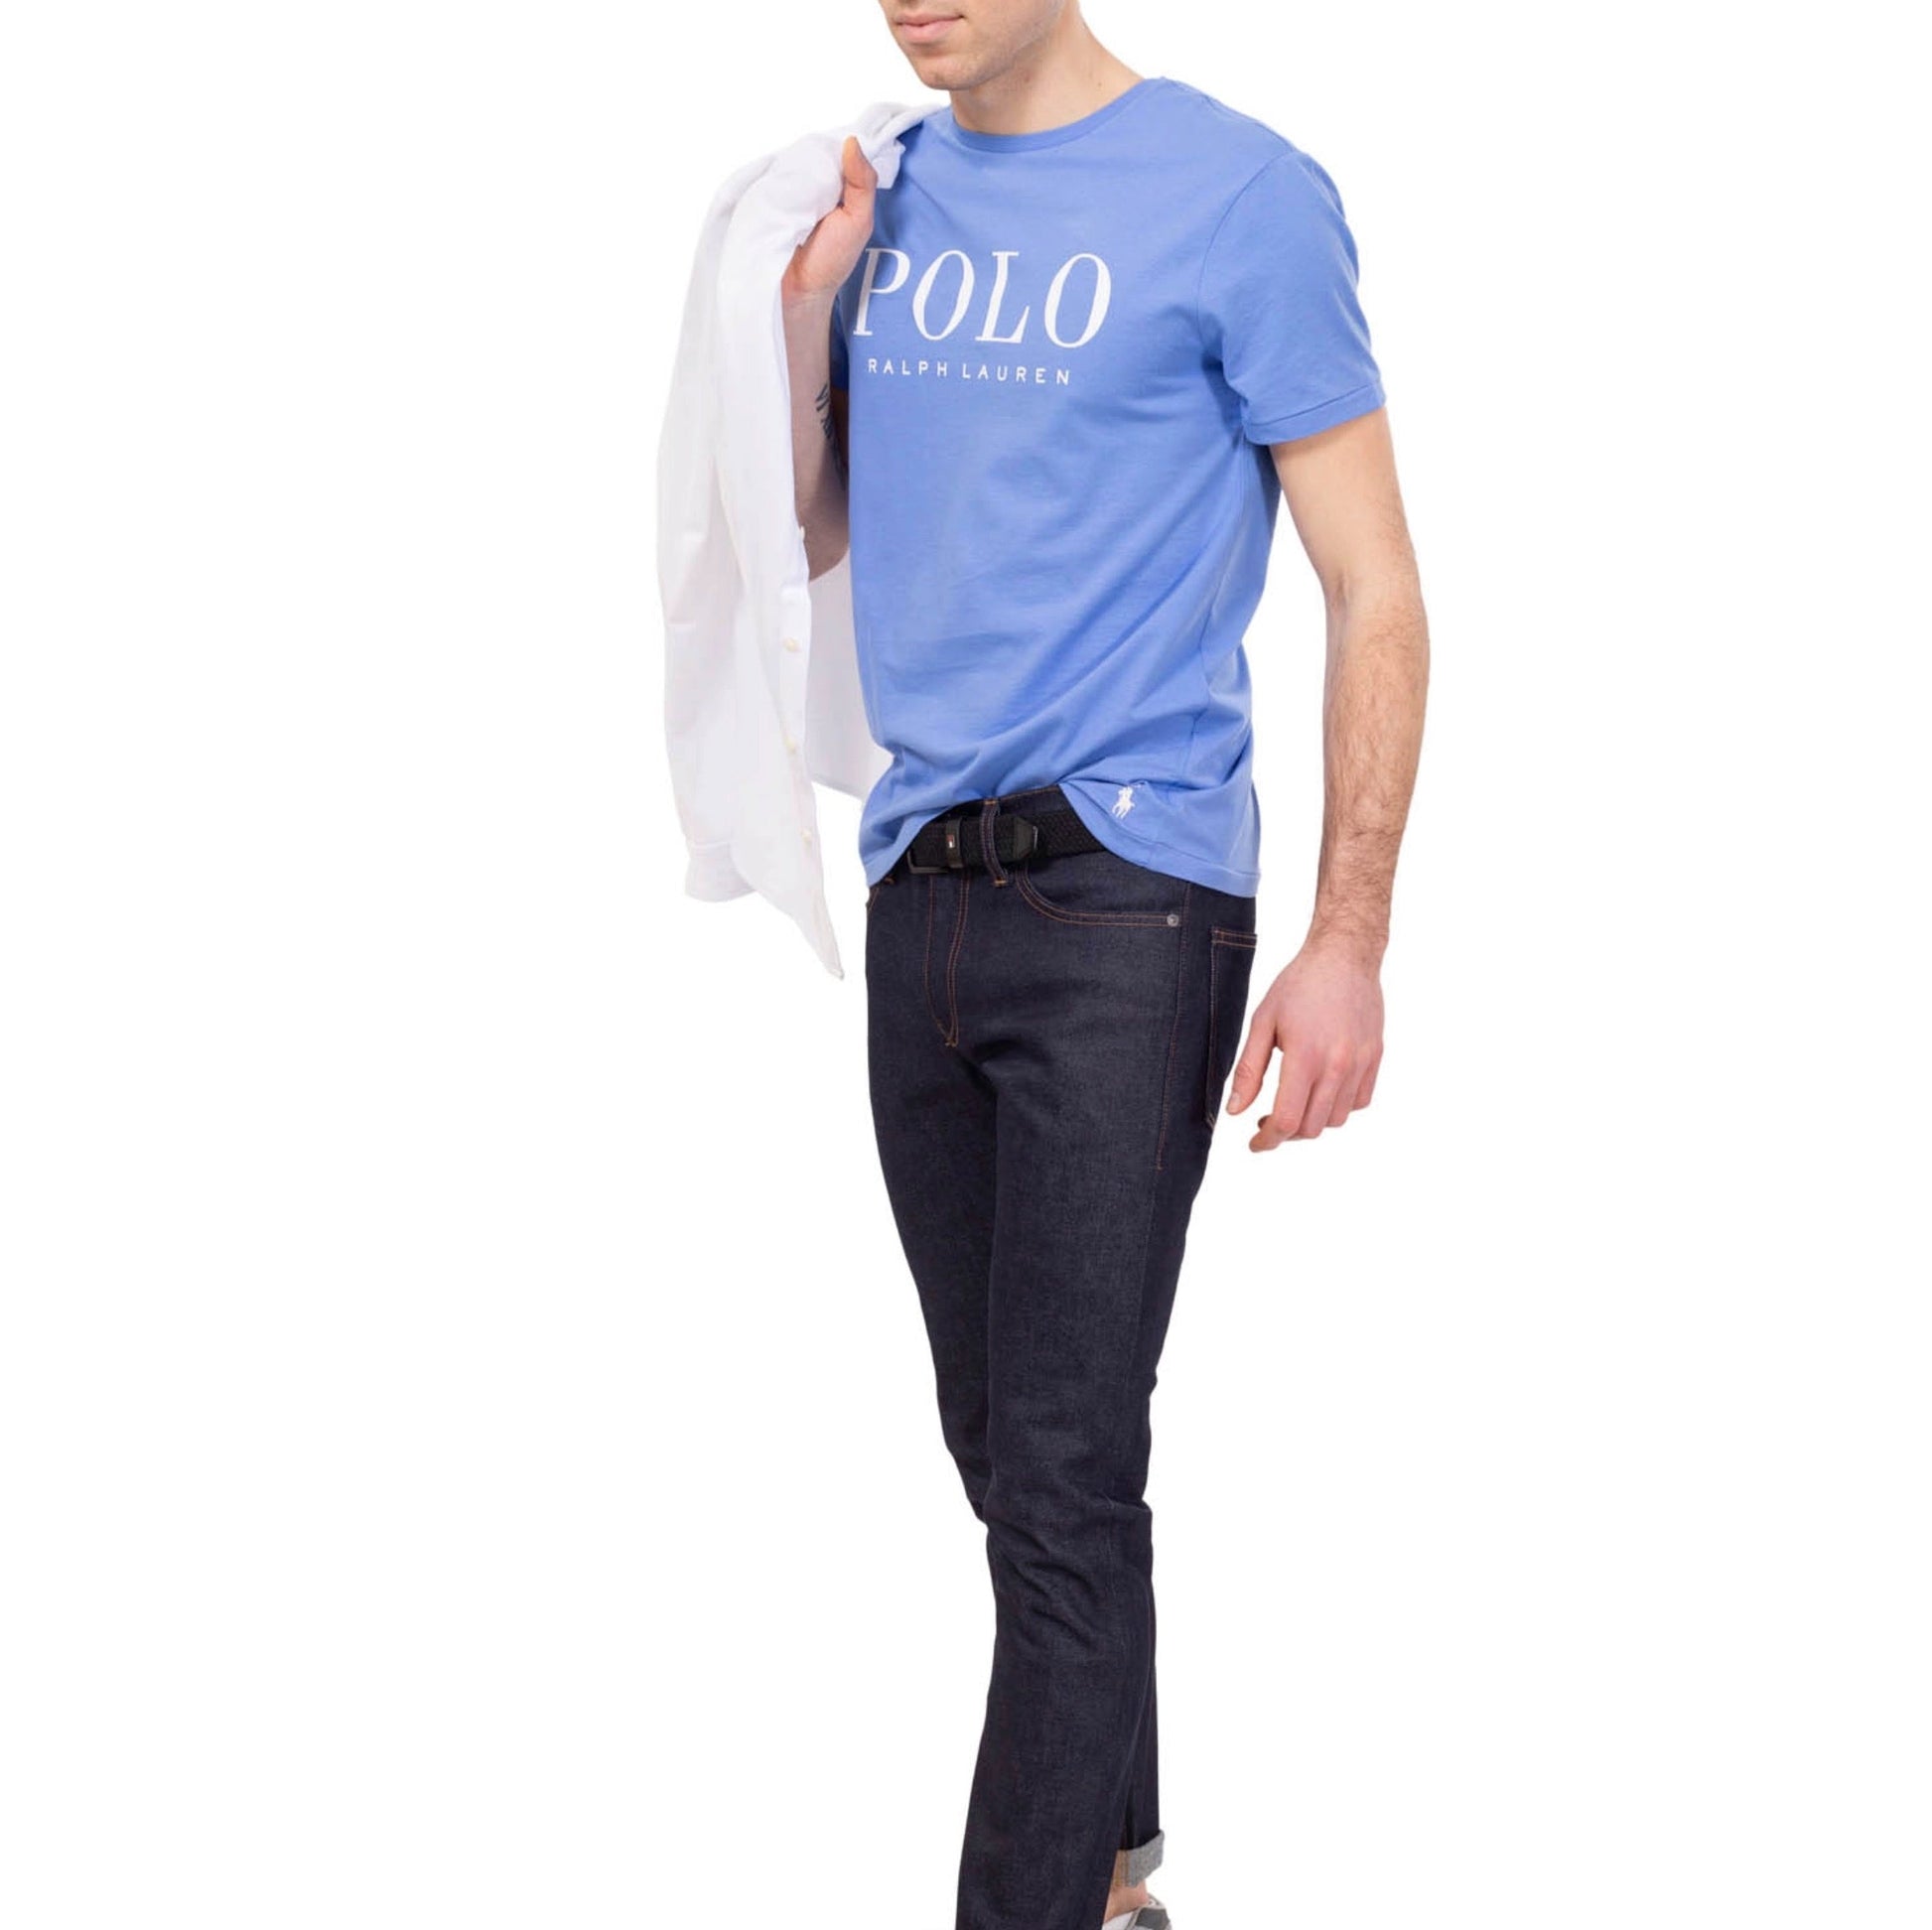 Polo Ralph Lauren SLIM FIT - Polo shirt - harbor island blue/blue